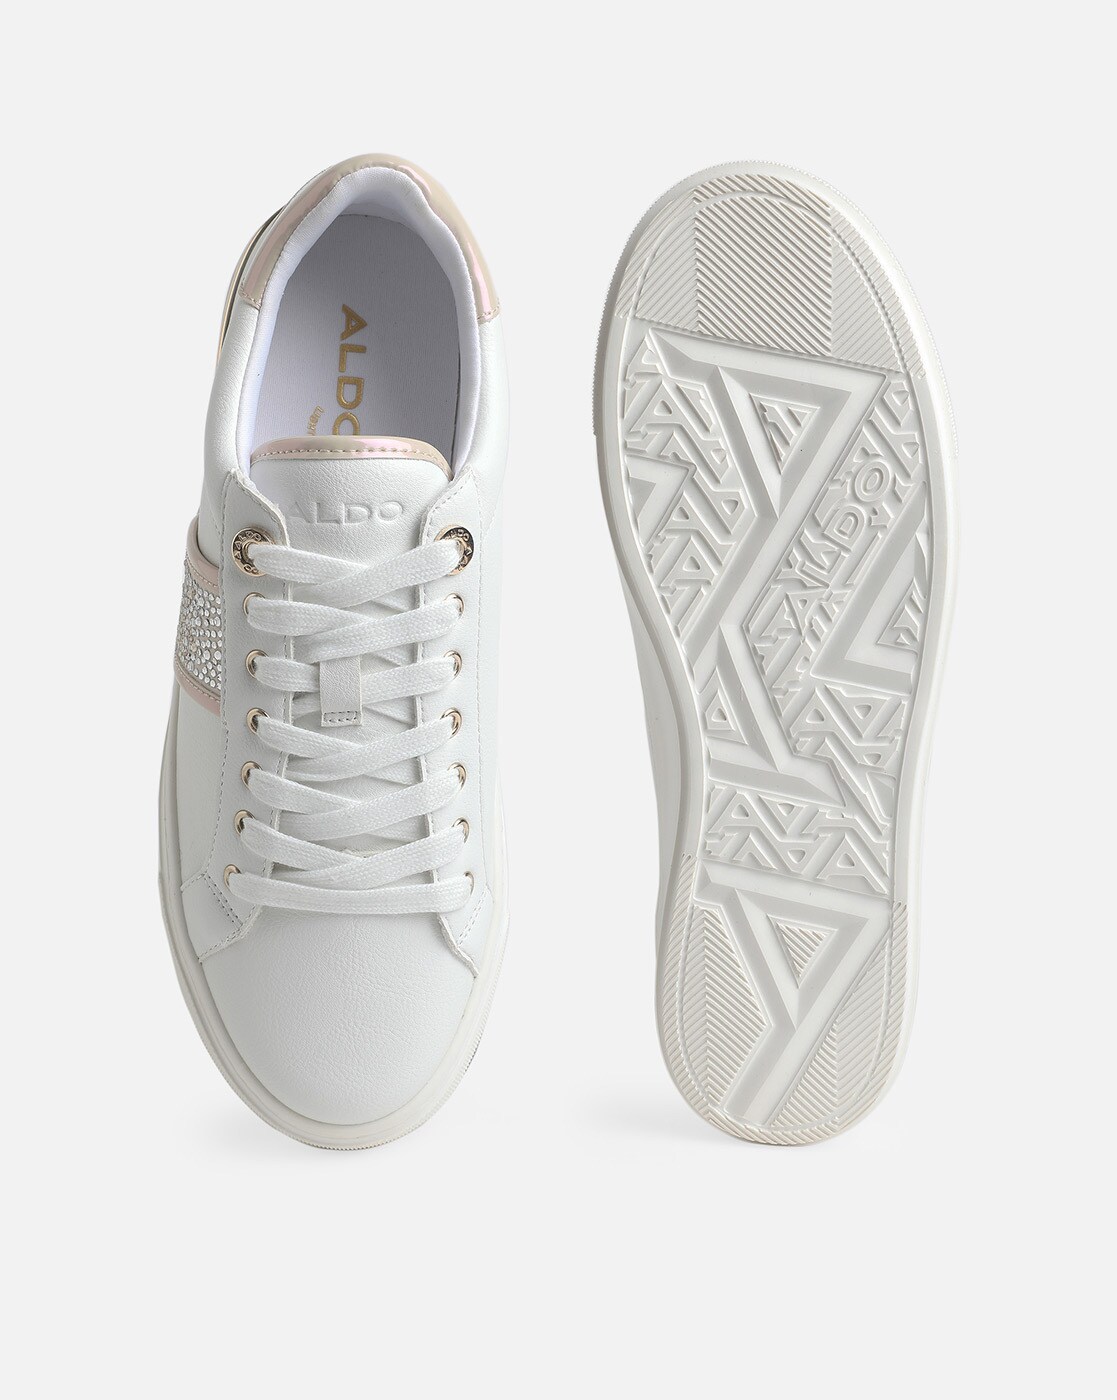 Discover more than 160 aldo white sneakers latest